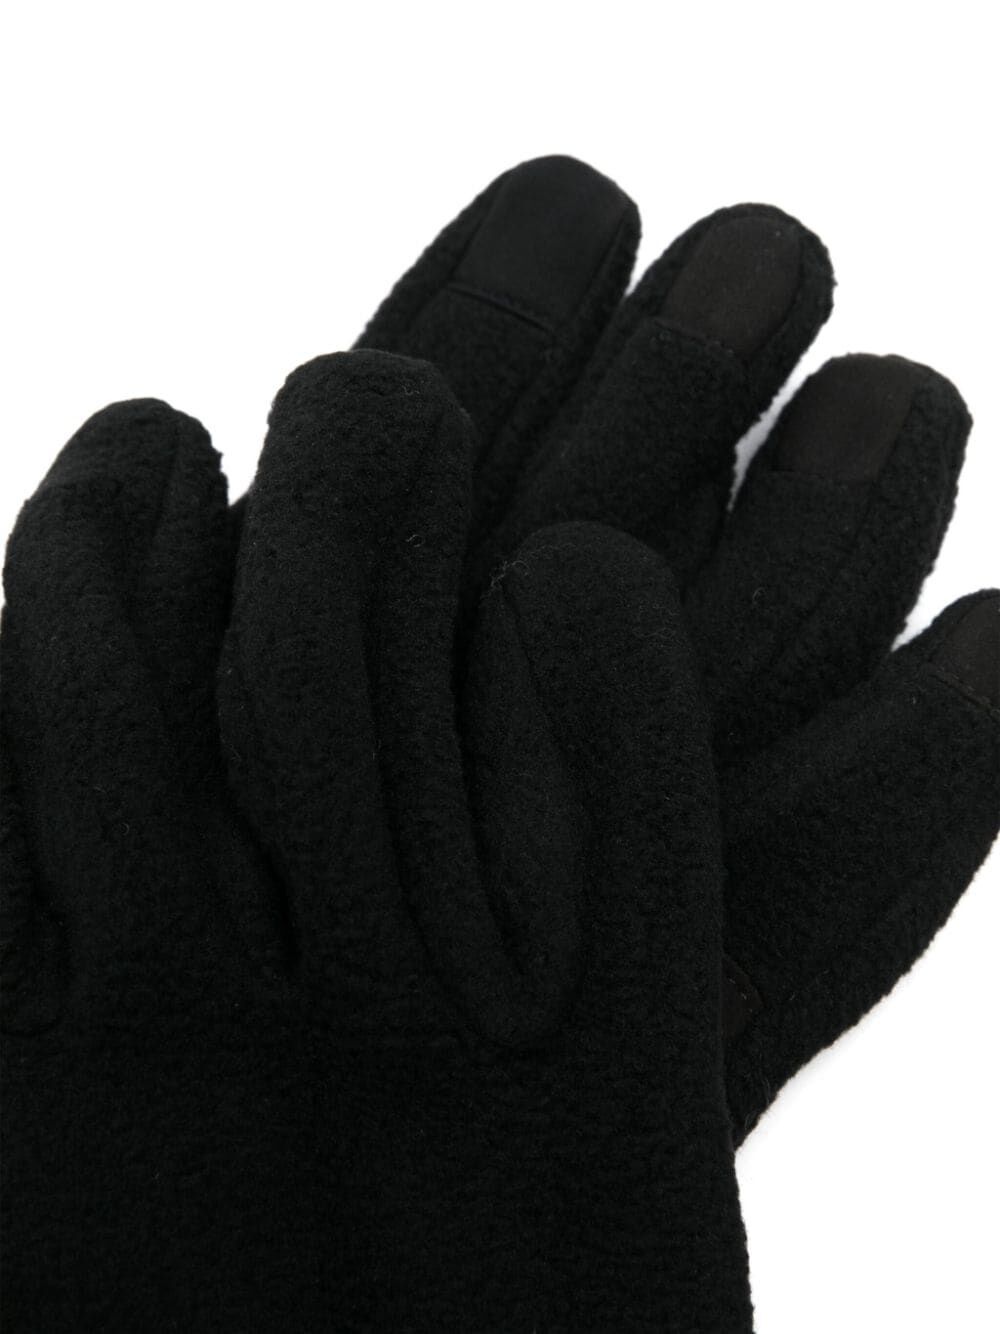 Neri Synch gloves - 2